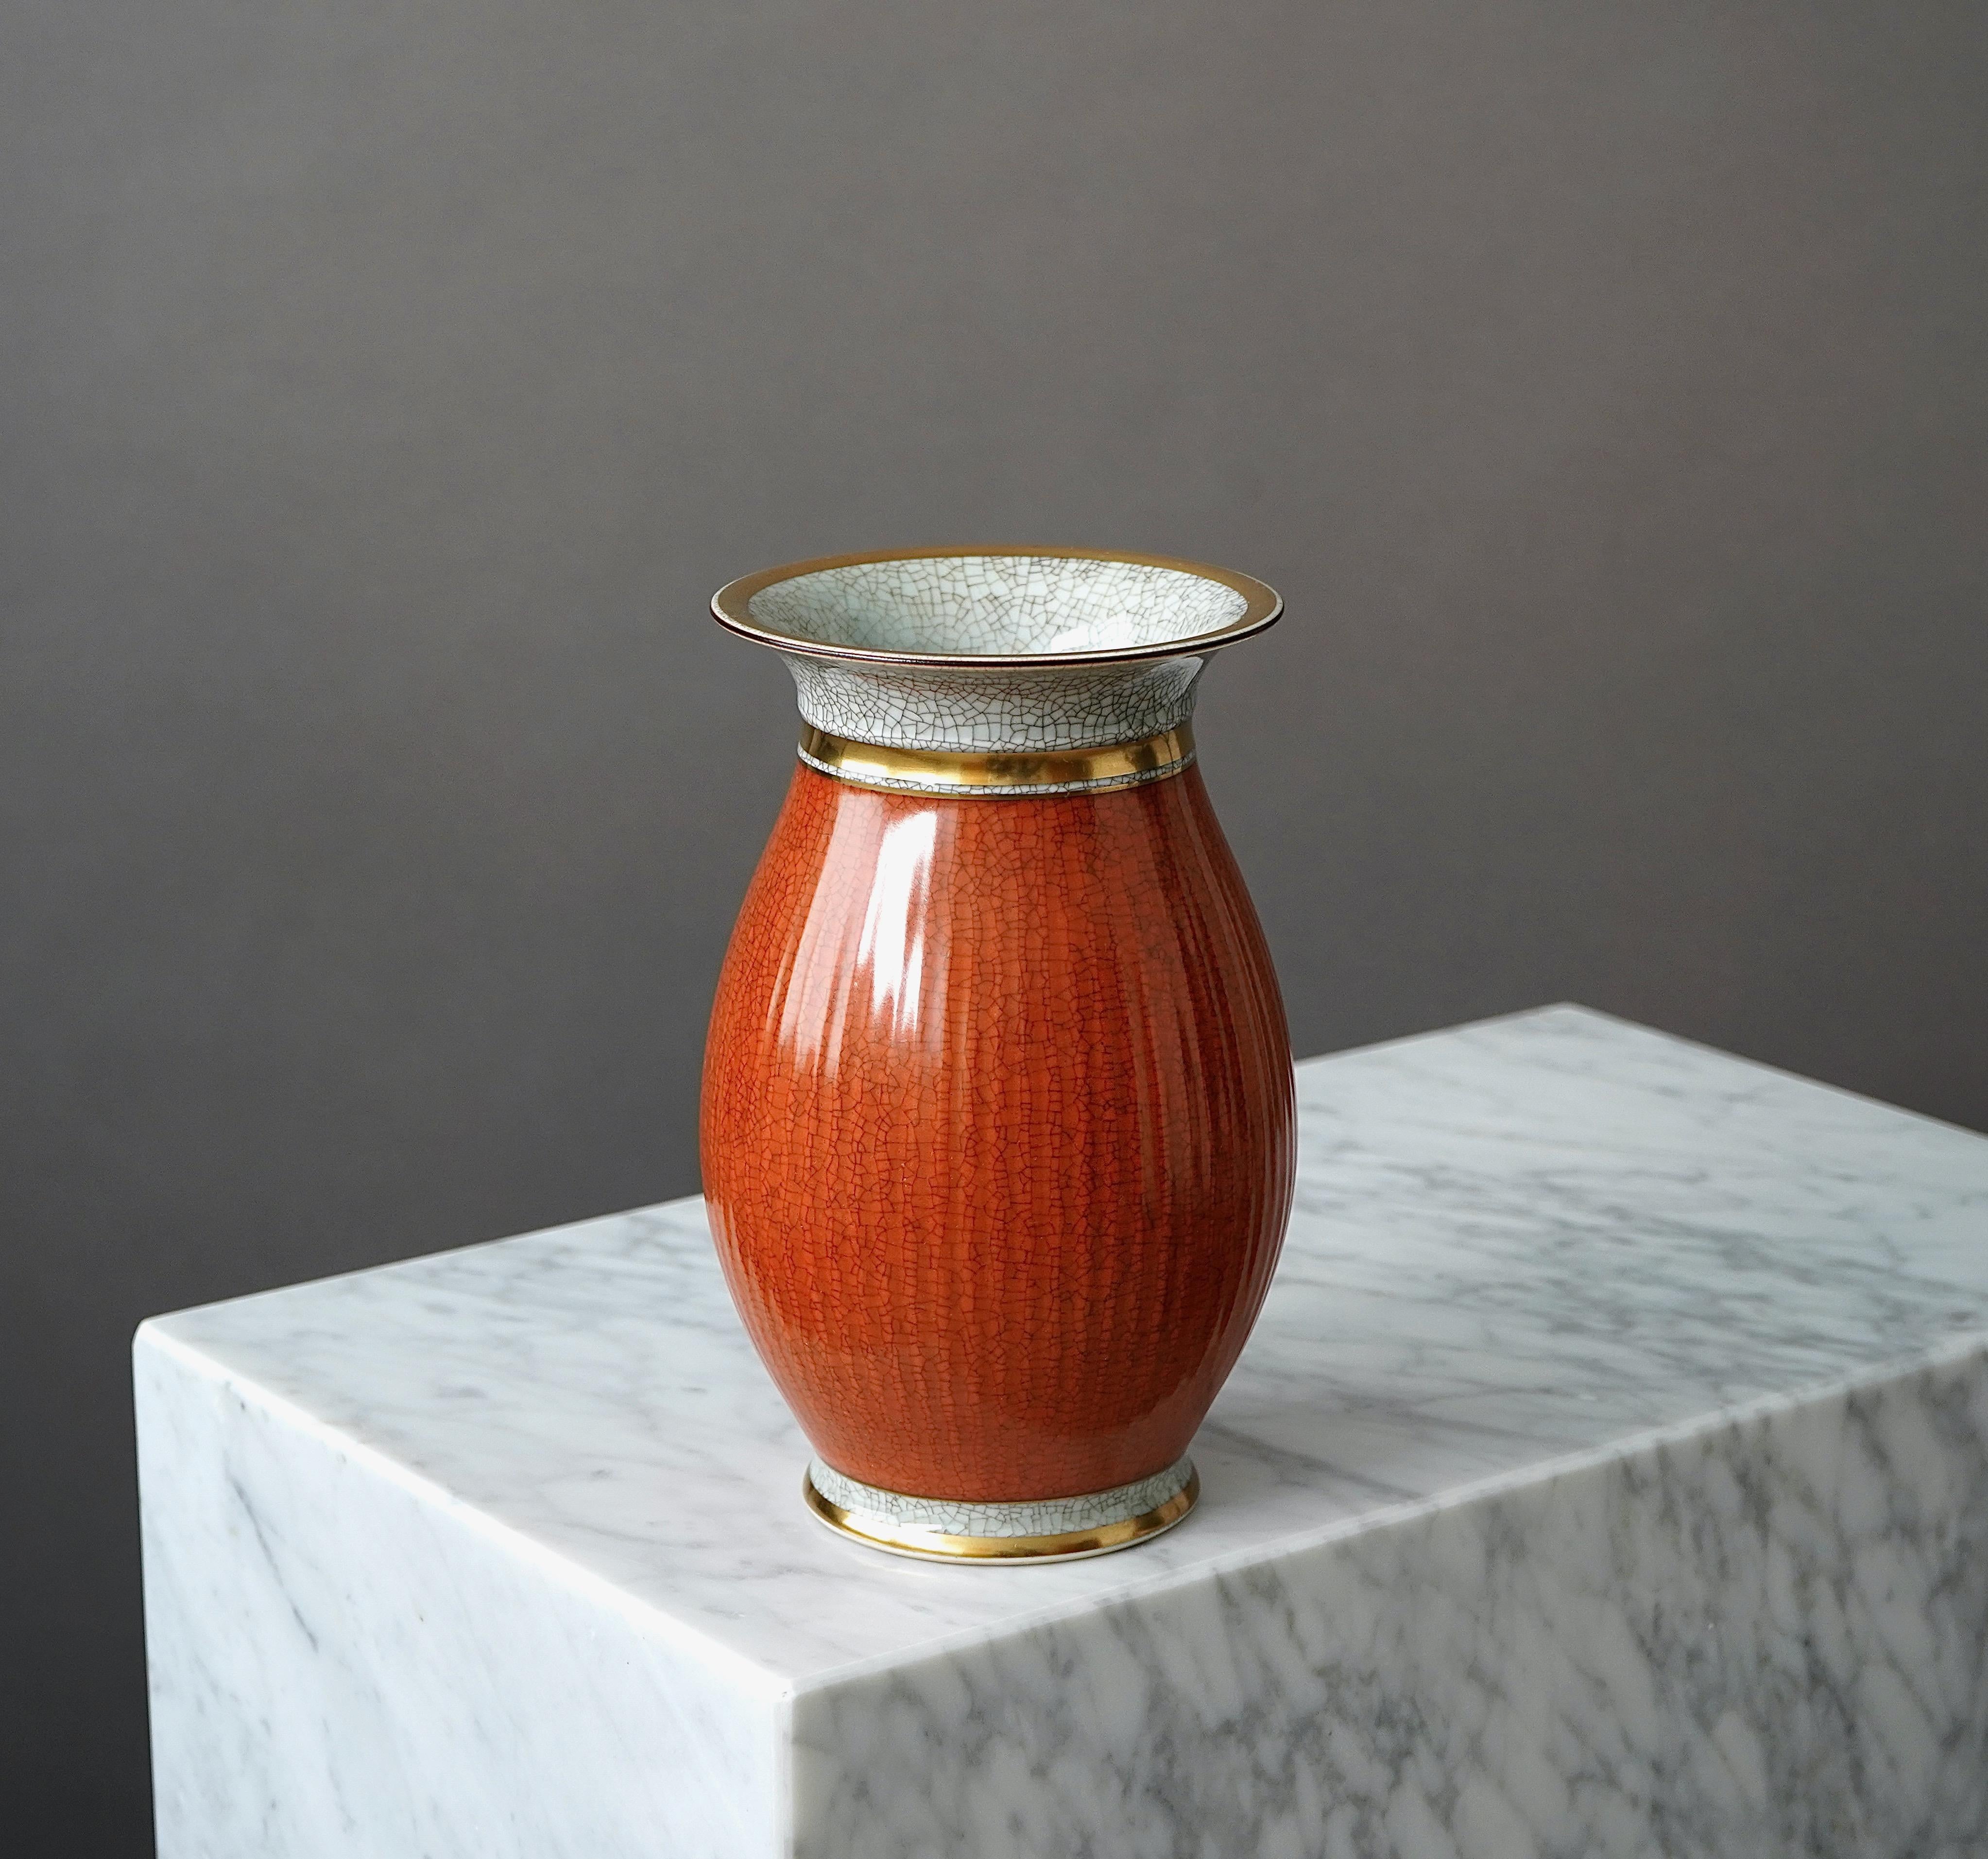 Elegant Royal Copenhagen crackle glazed vase with gilded banding on neck and base.
Designed by THORKILD OLSEN (1890-1973) for ROYAL COPENHAGEN. Made in Denmark, 1958.

Great condition. Makers marks on base of vase.